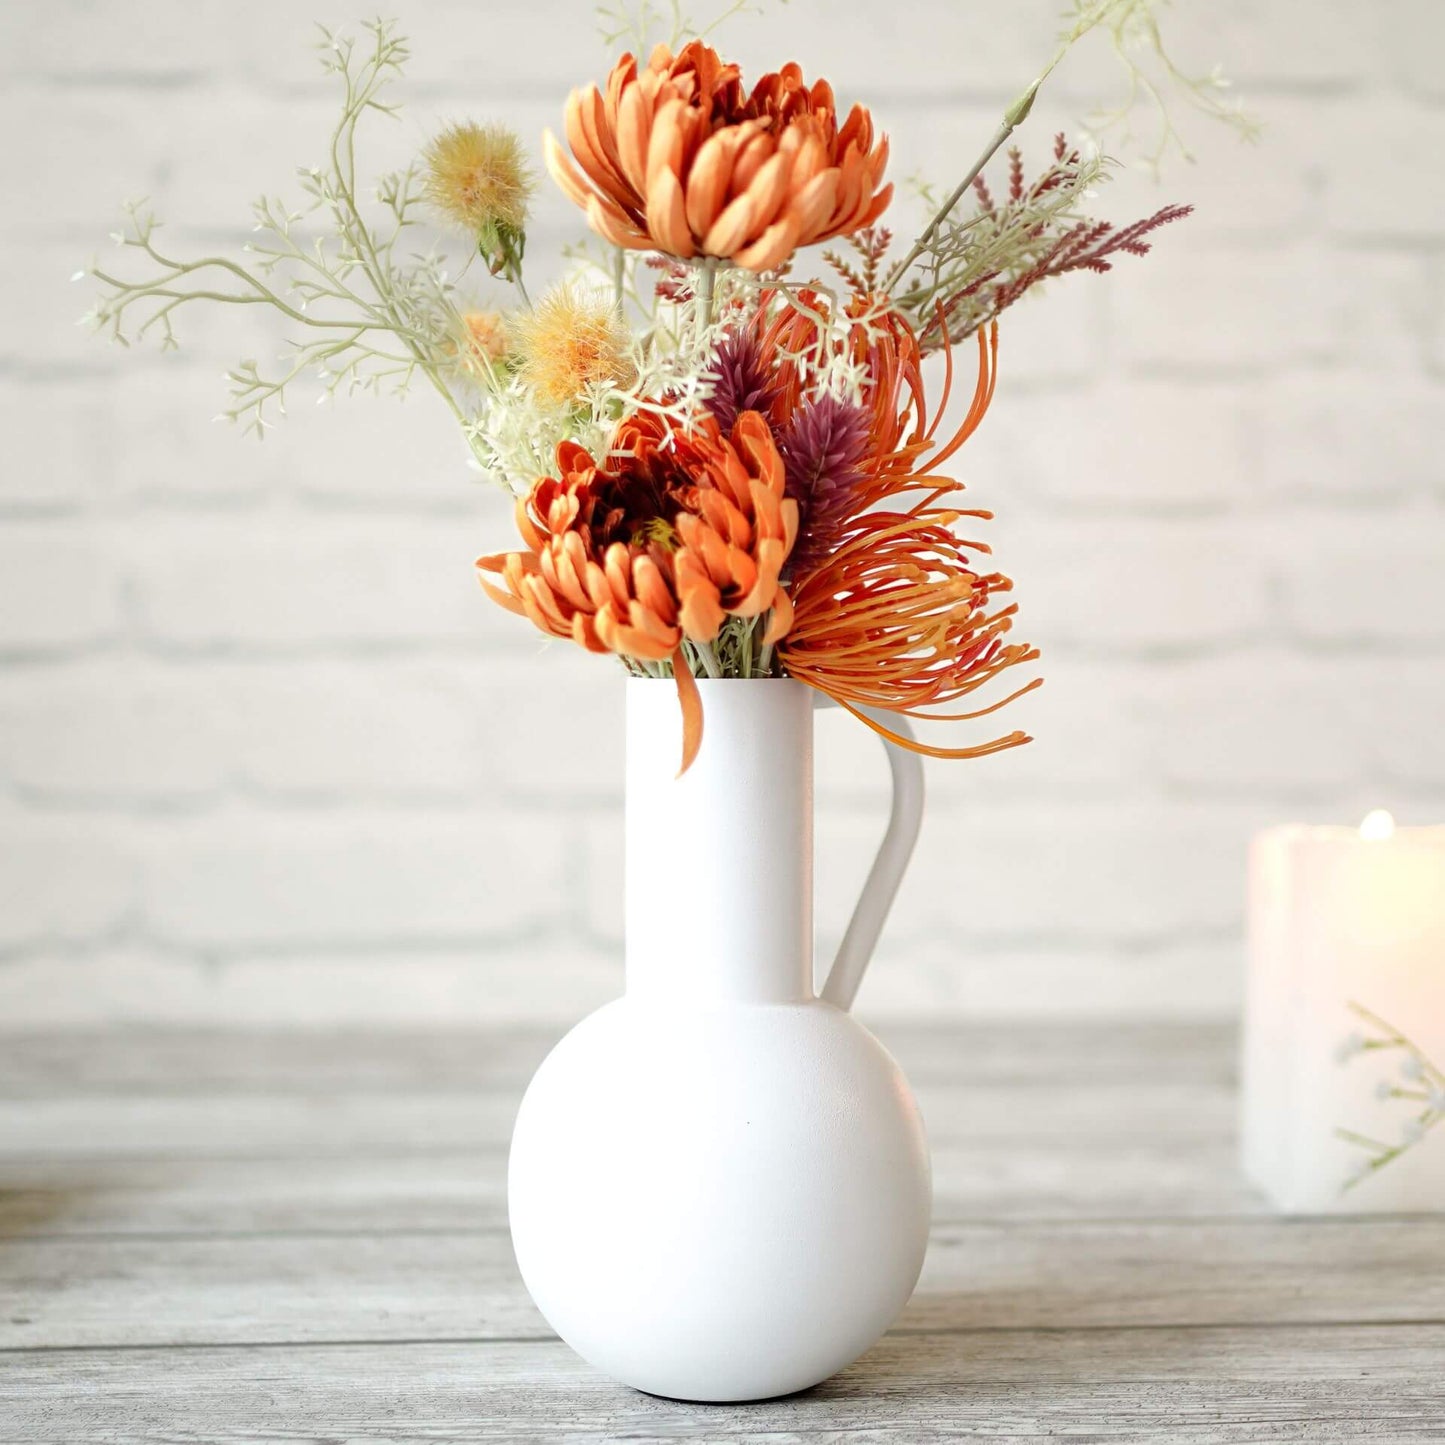 Metal jug shape flower vase white 